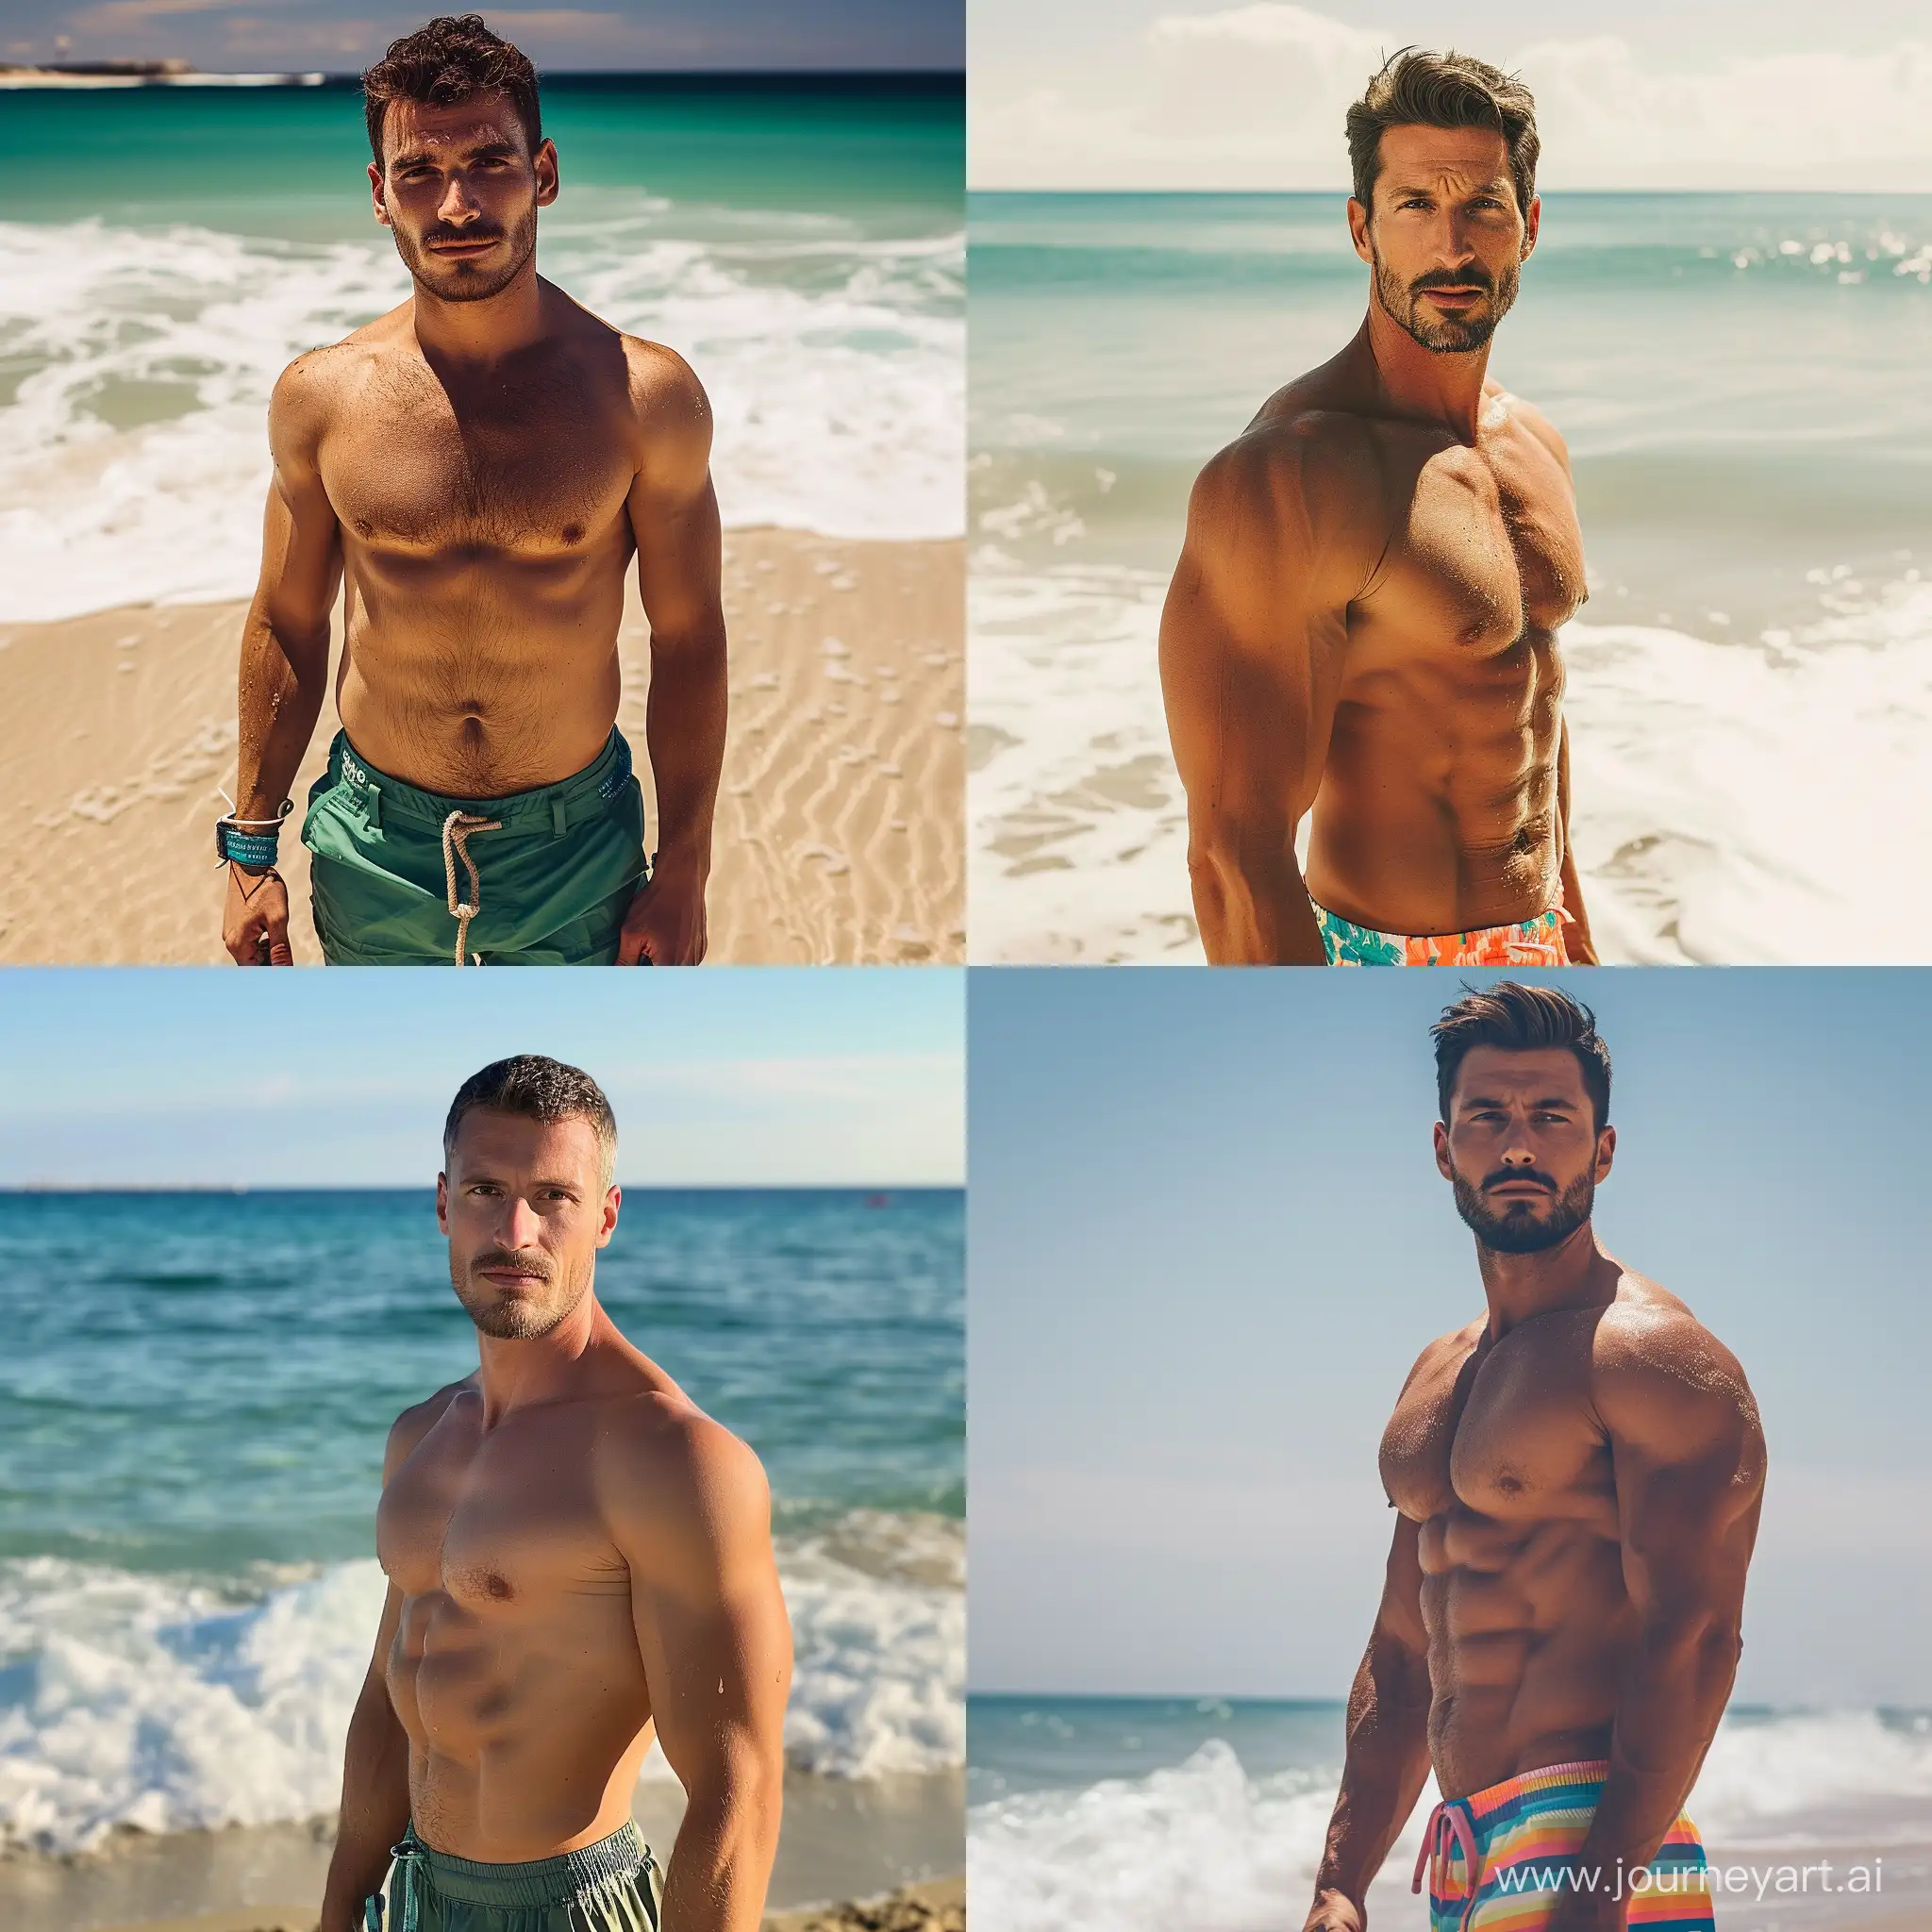 мужчина 30 лет, вес 70 кг, торс, грудь, в плавках, на пляже
